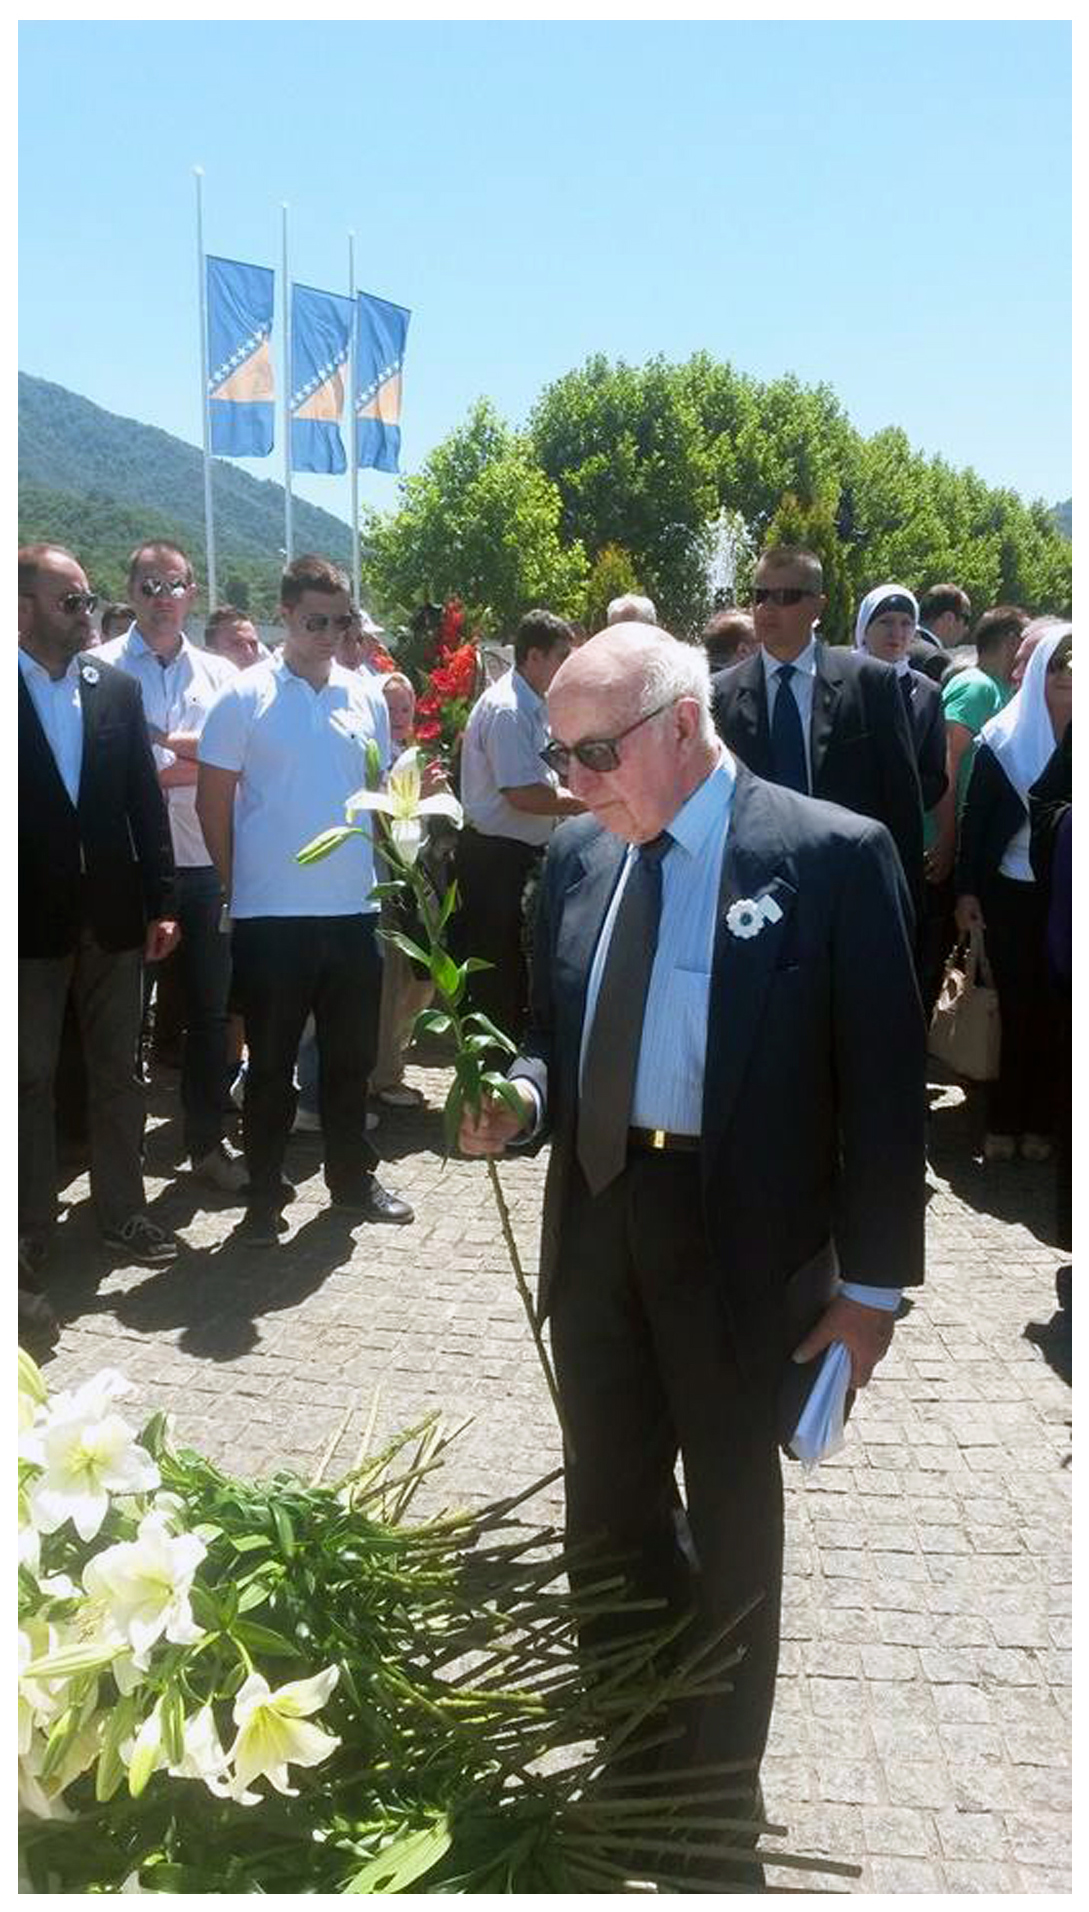 Srebrenica-Potočari Memorial Center, 11 July 2016, © UN ICTY